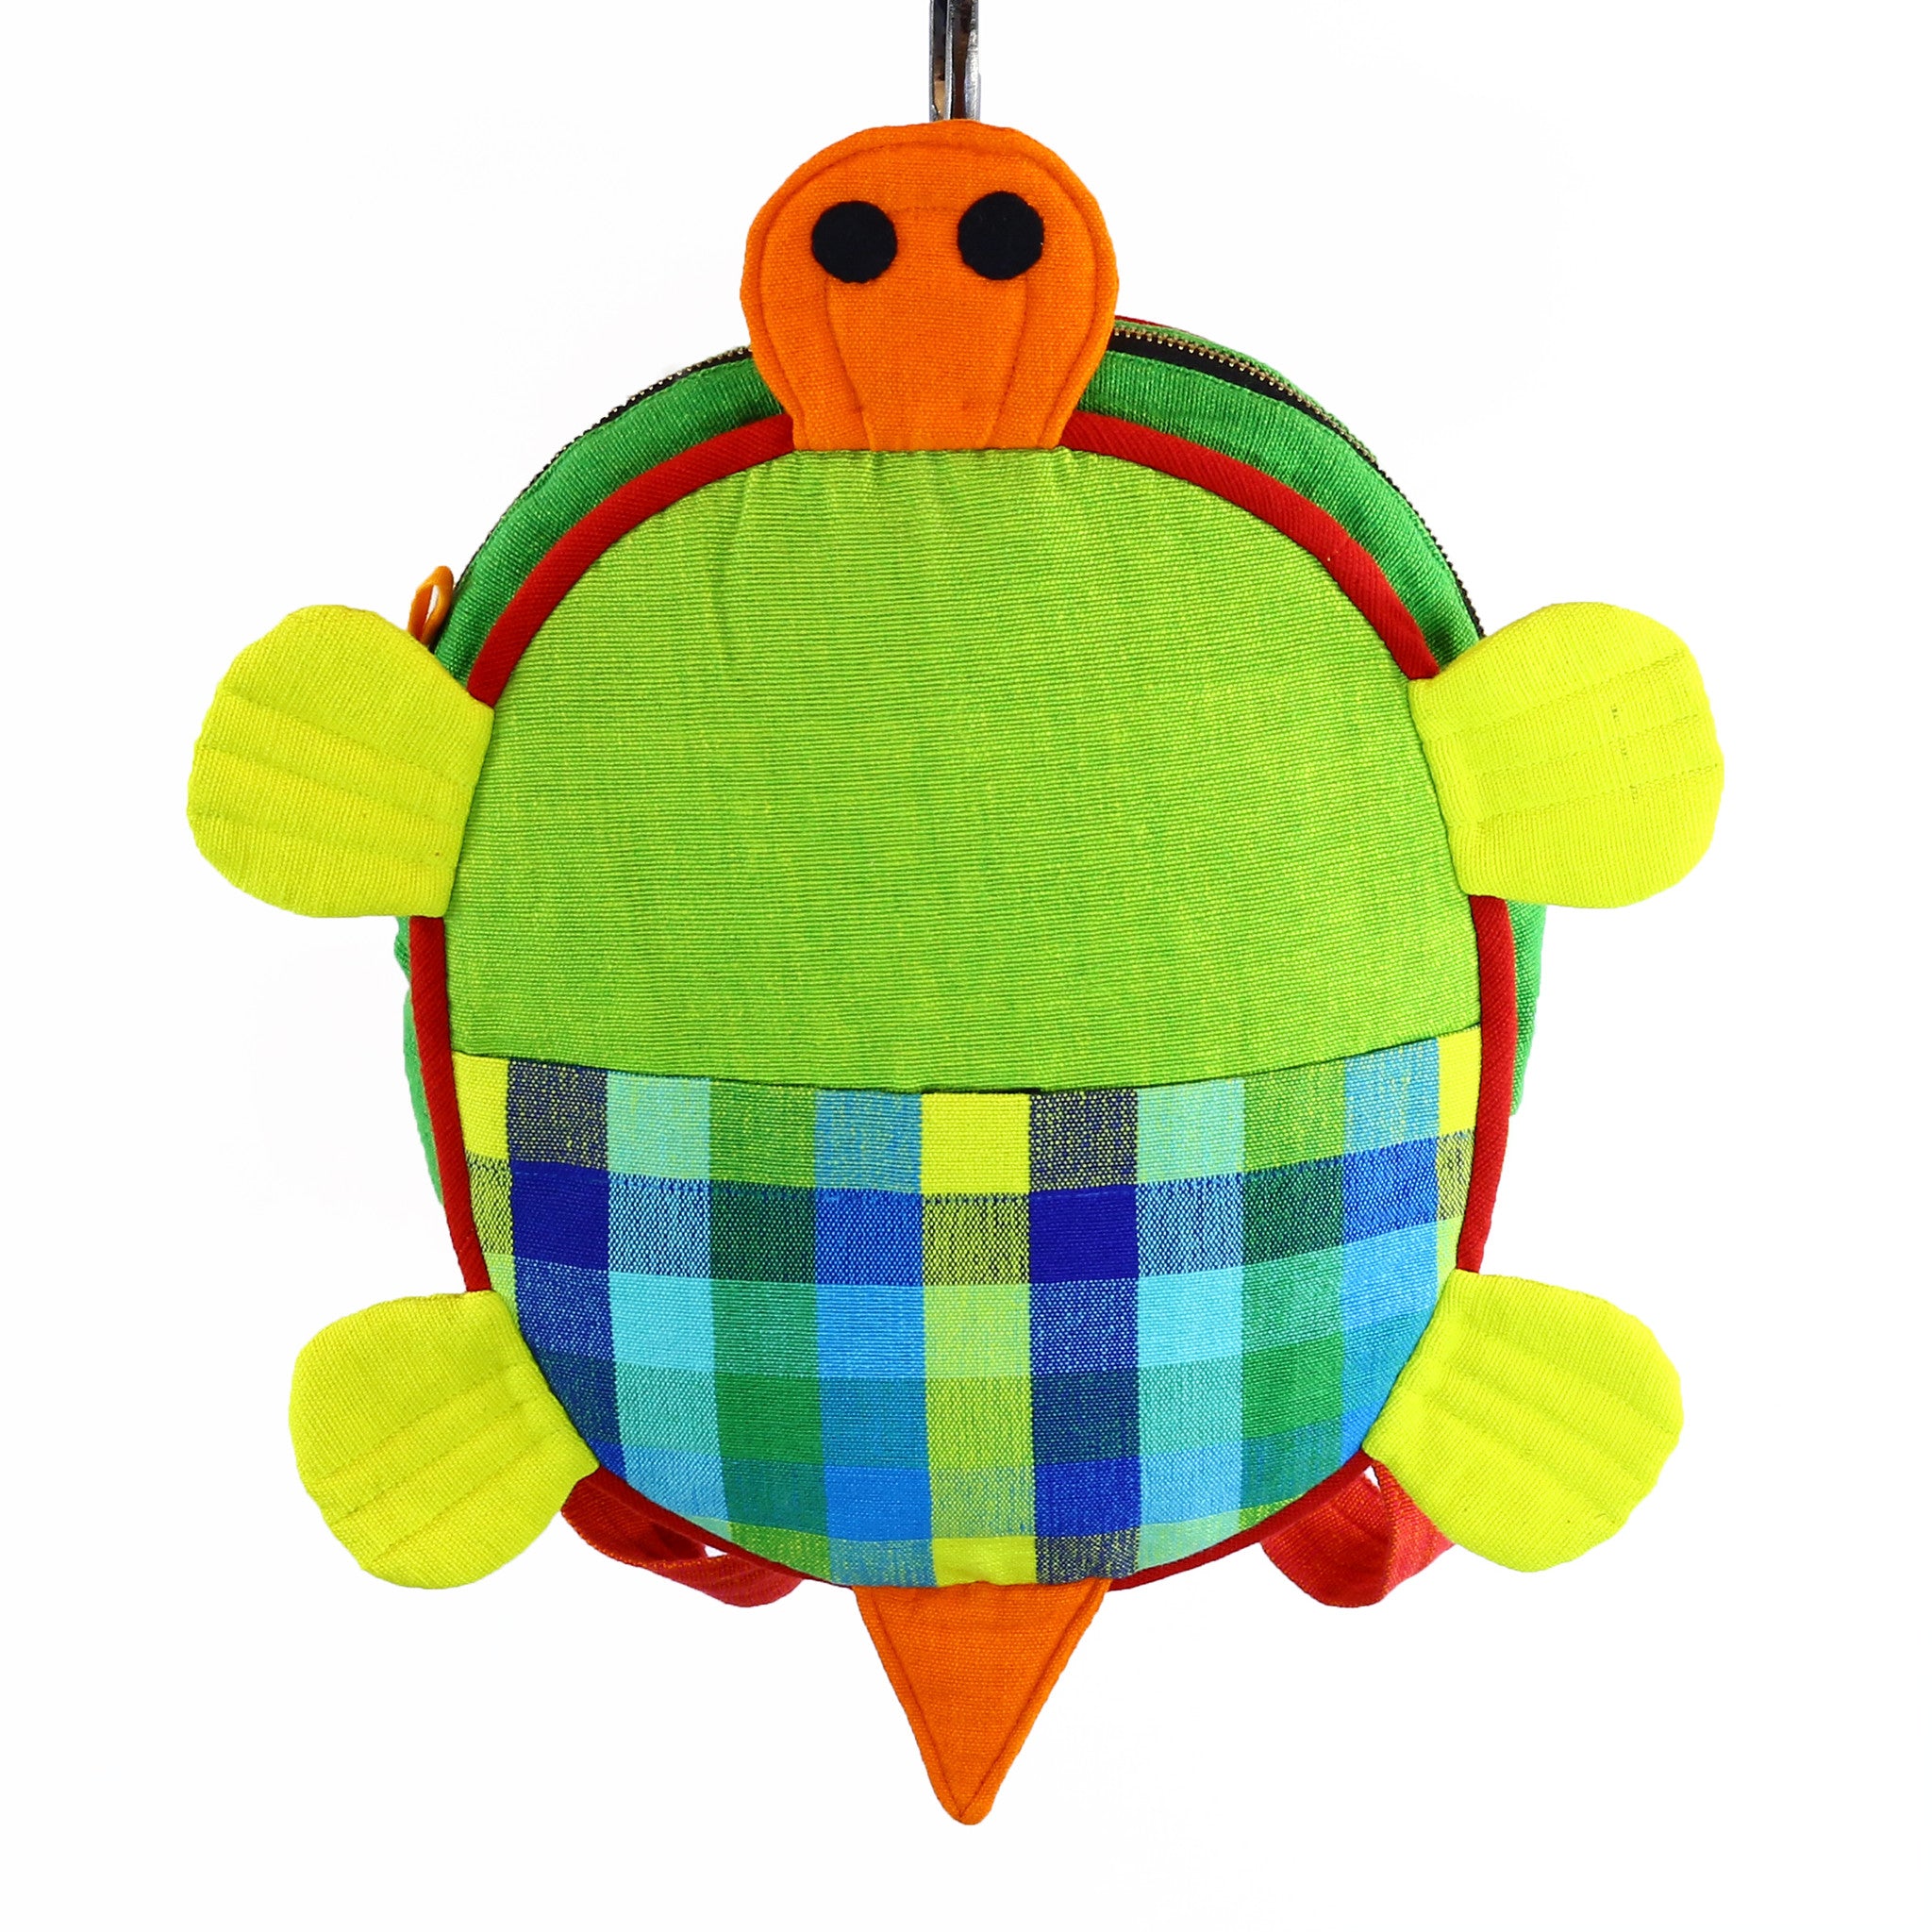 Turtle Backpack – Grasshopper fabric